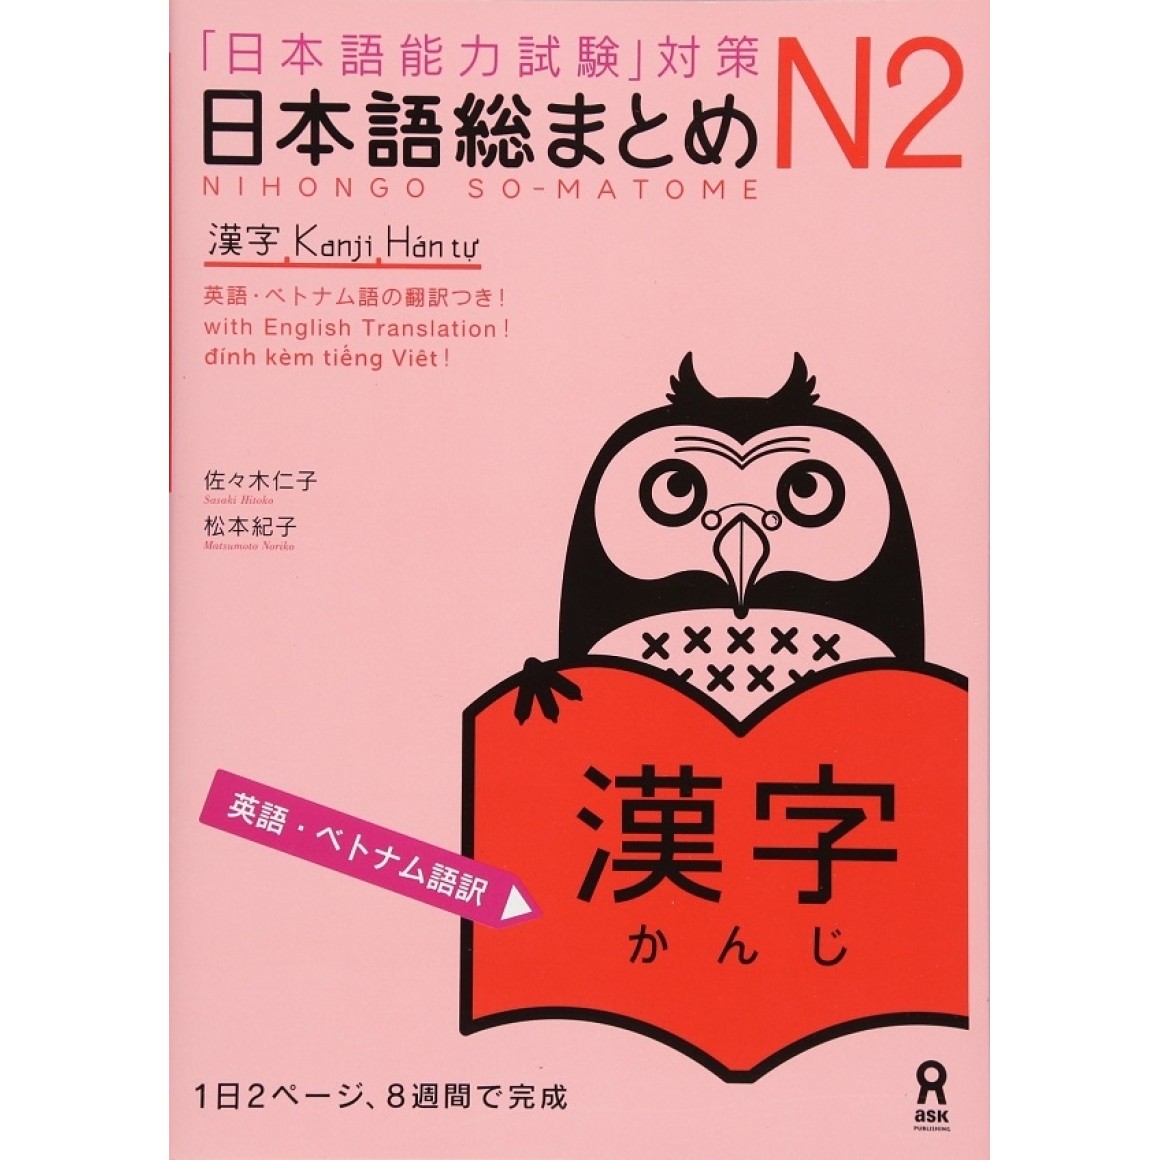 Nihongo So-Matome N2 - Kanji - Edição Japonesa 日本語総まとめ N2 漢字